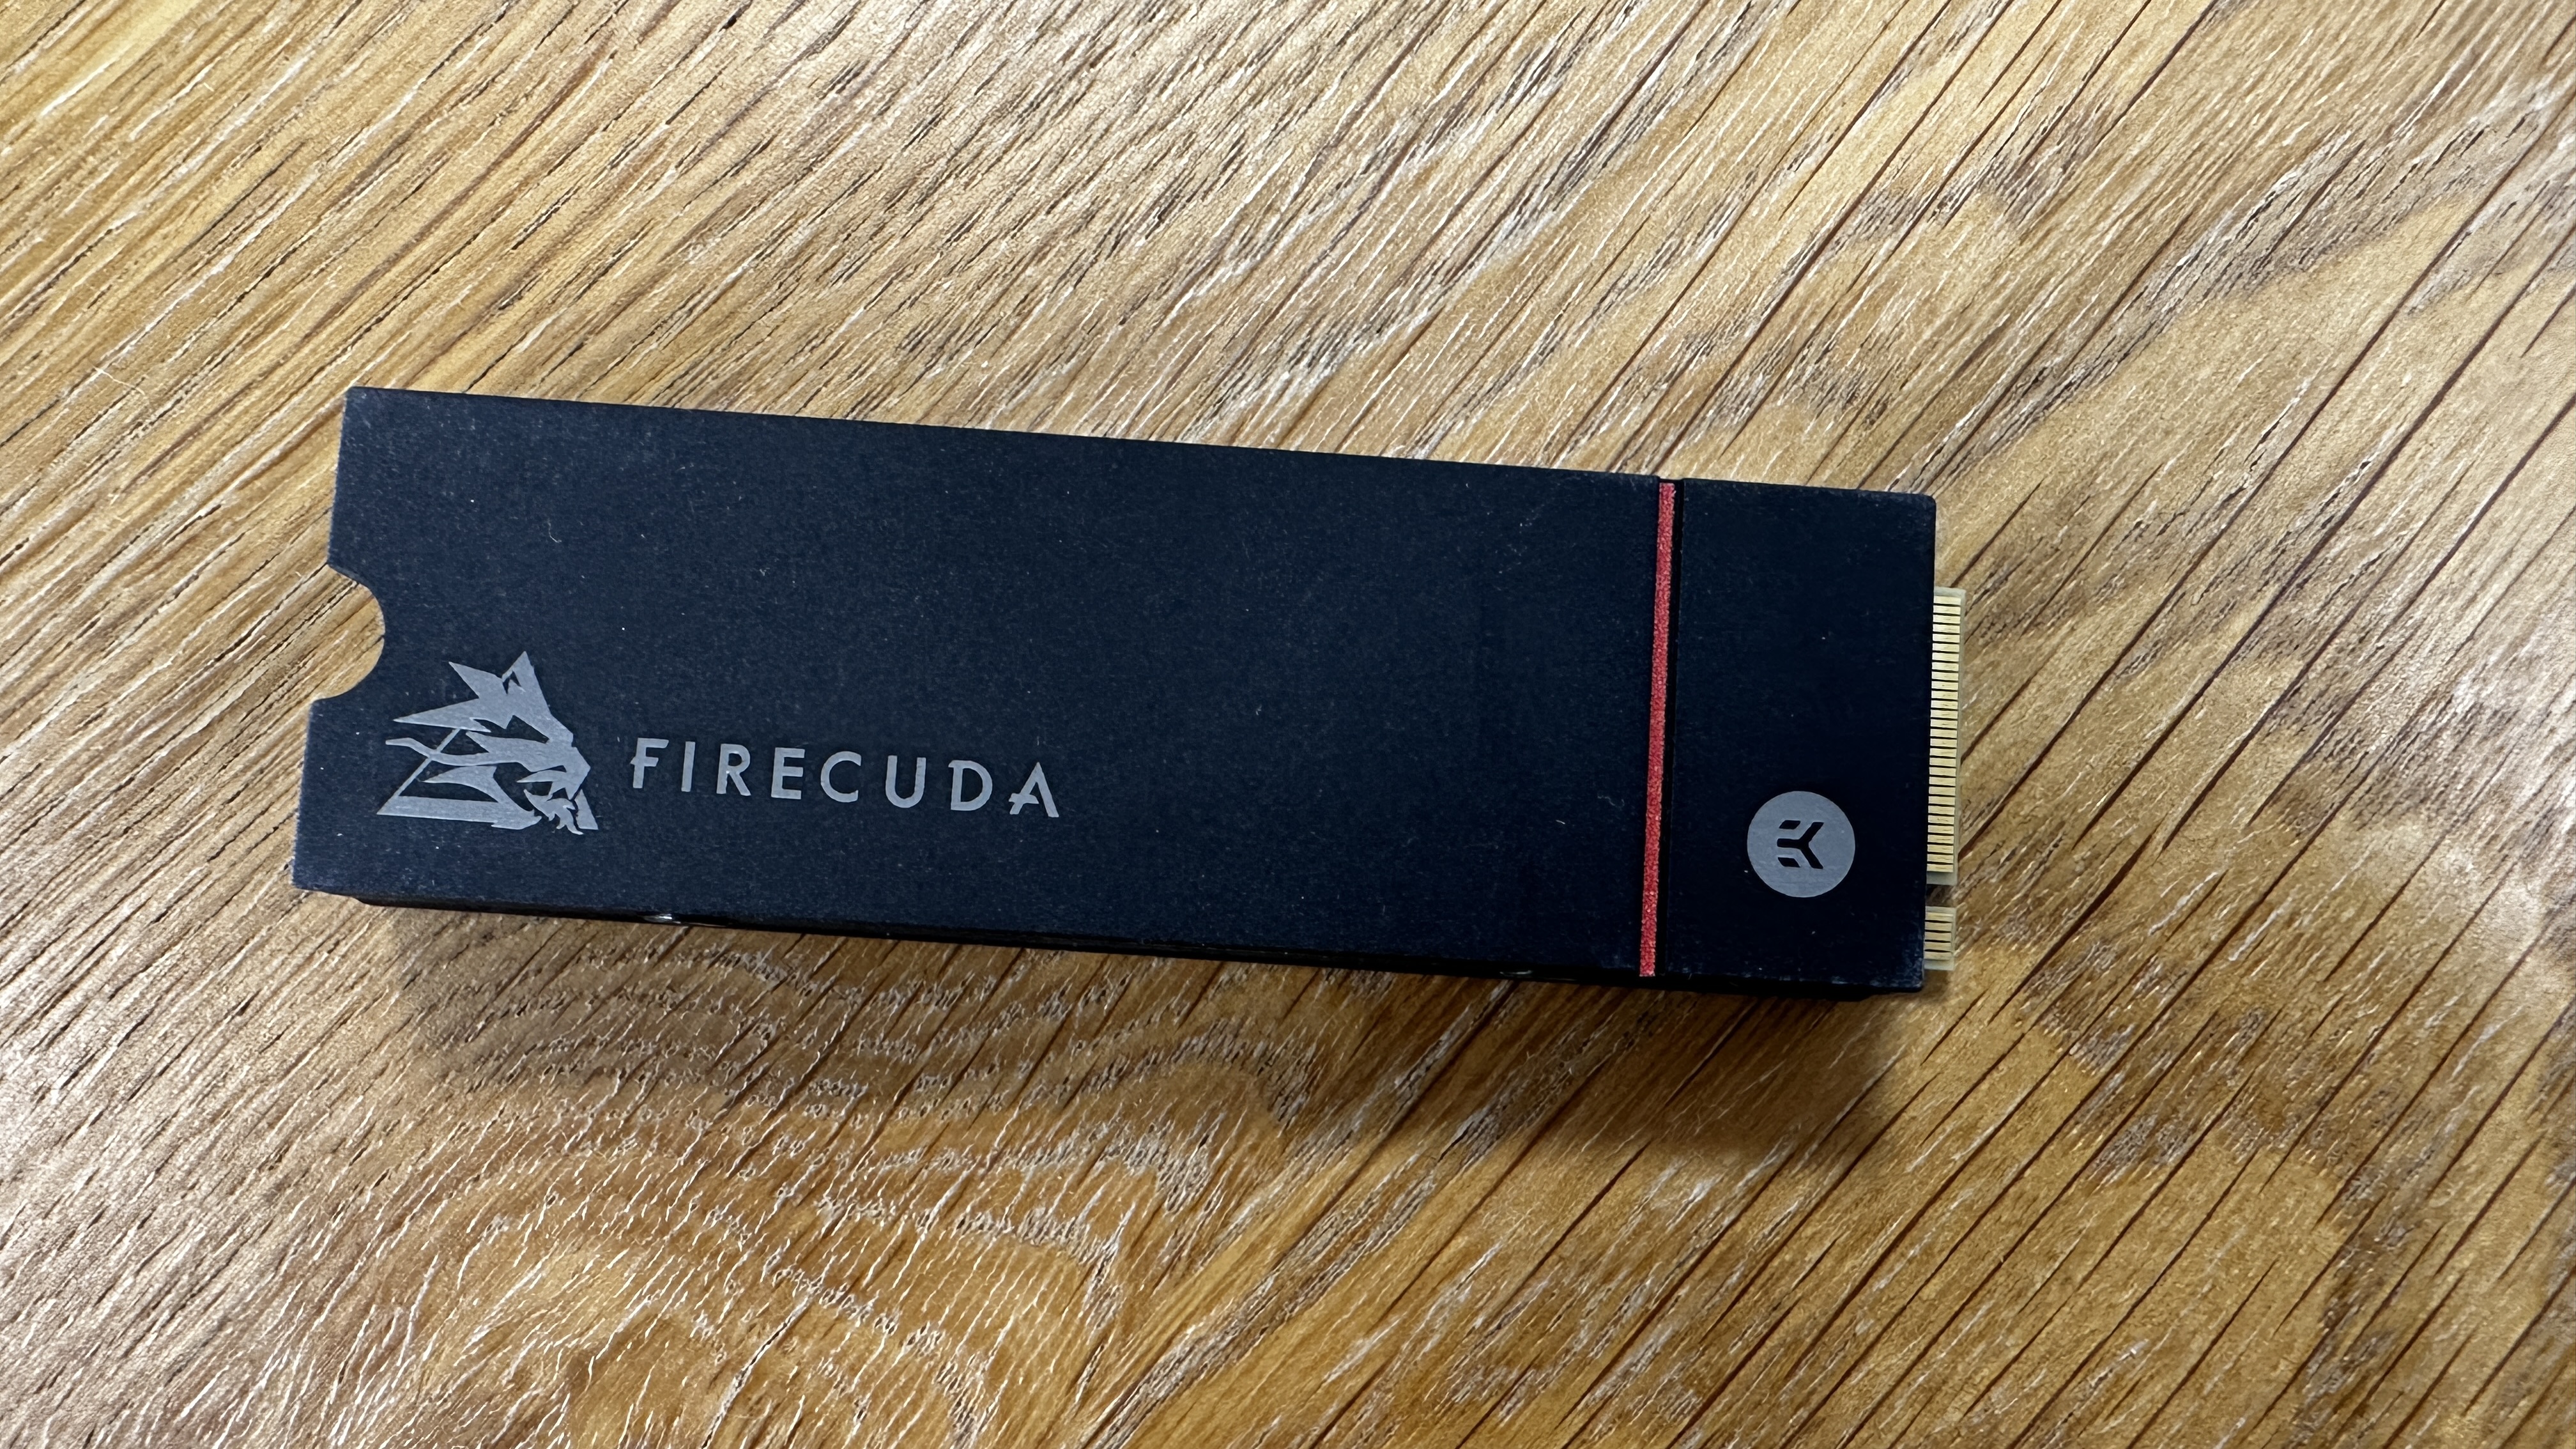 Seagate FireCuda 530 review - Still a trailblazer